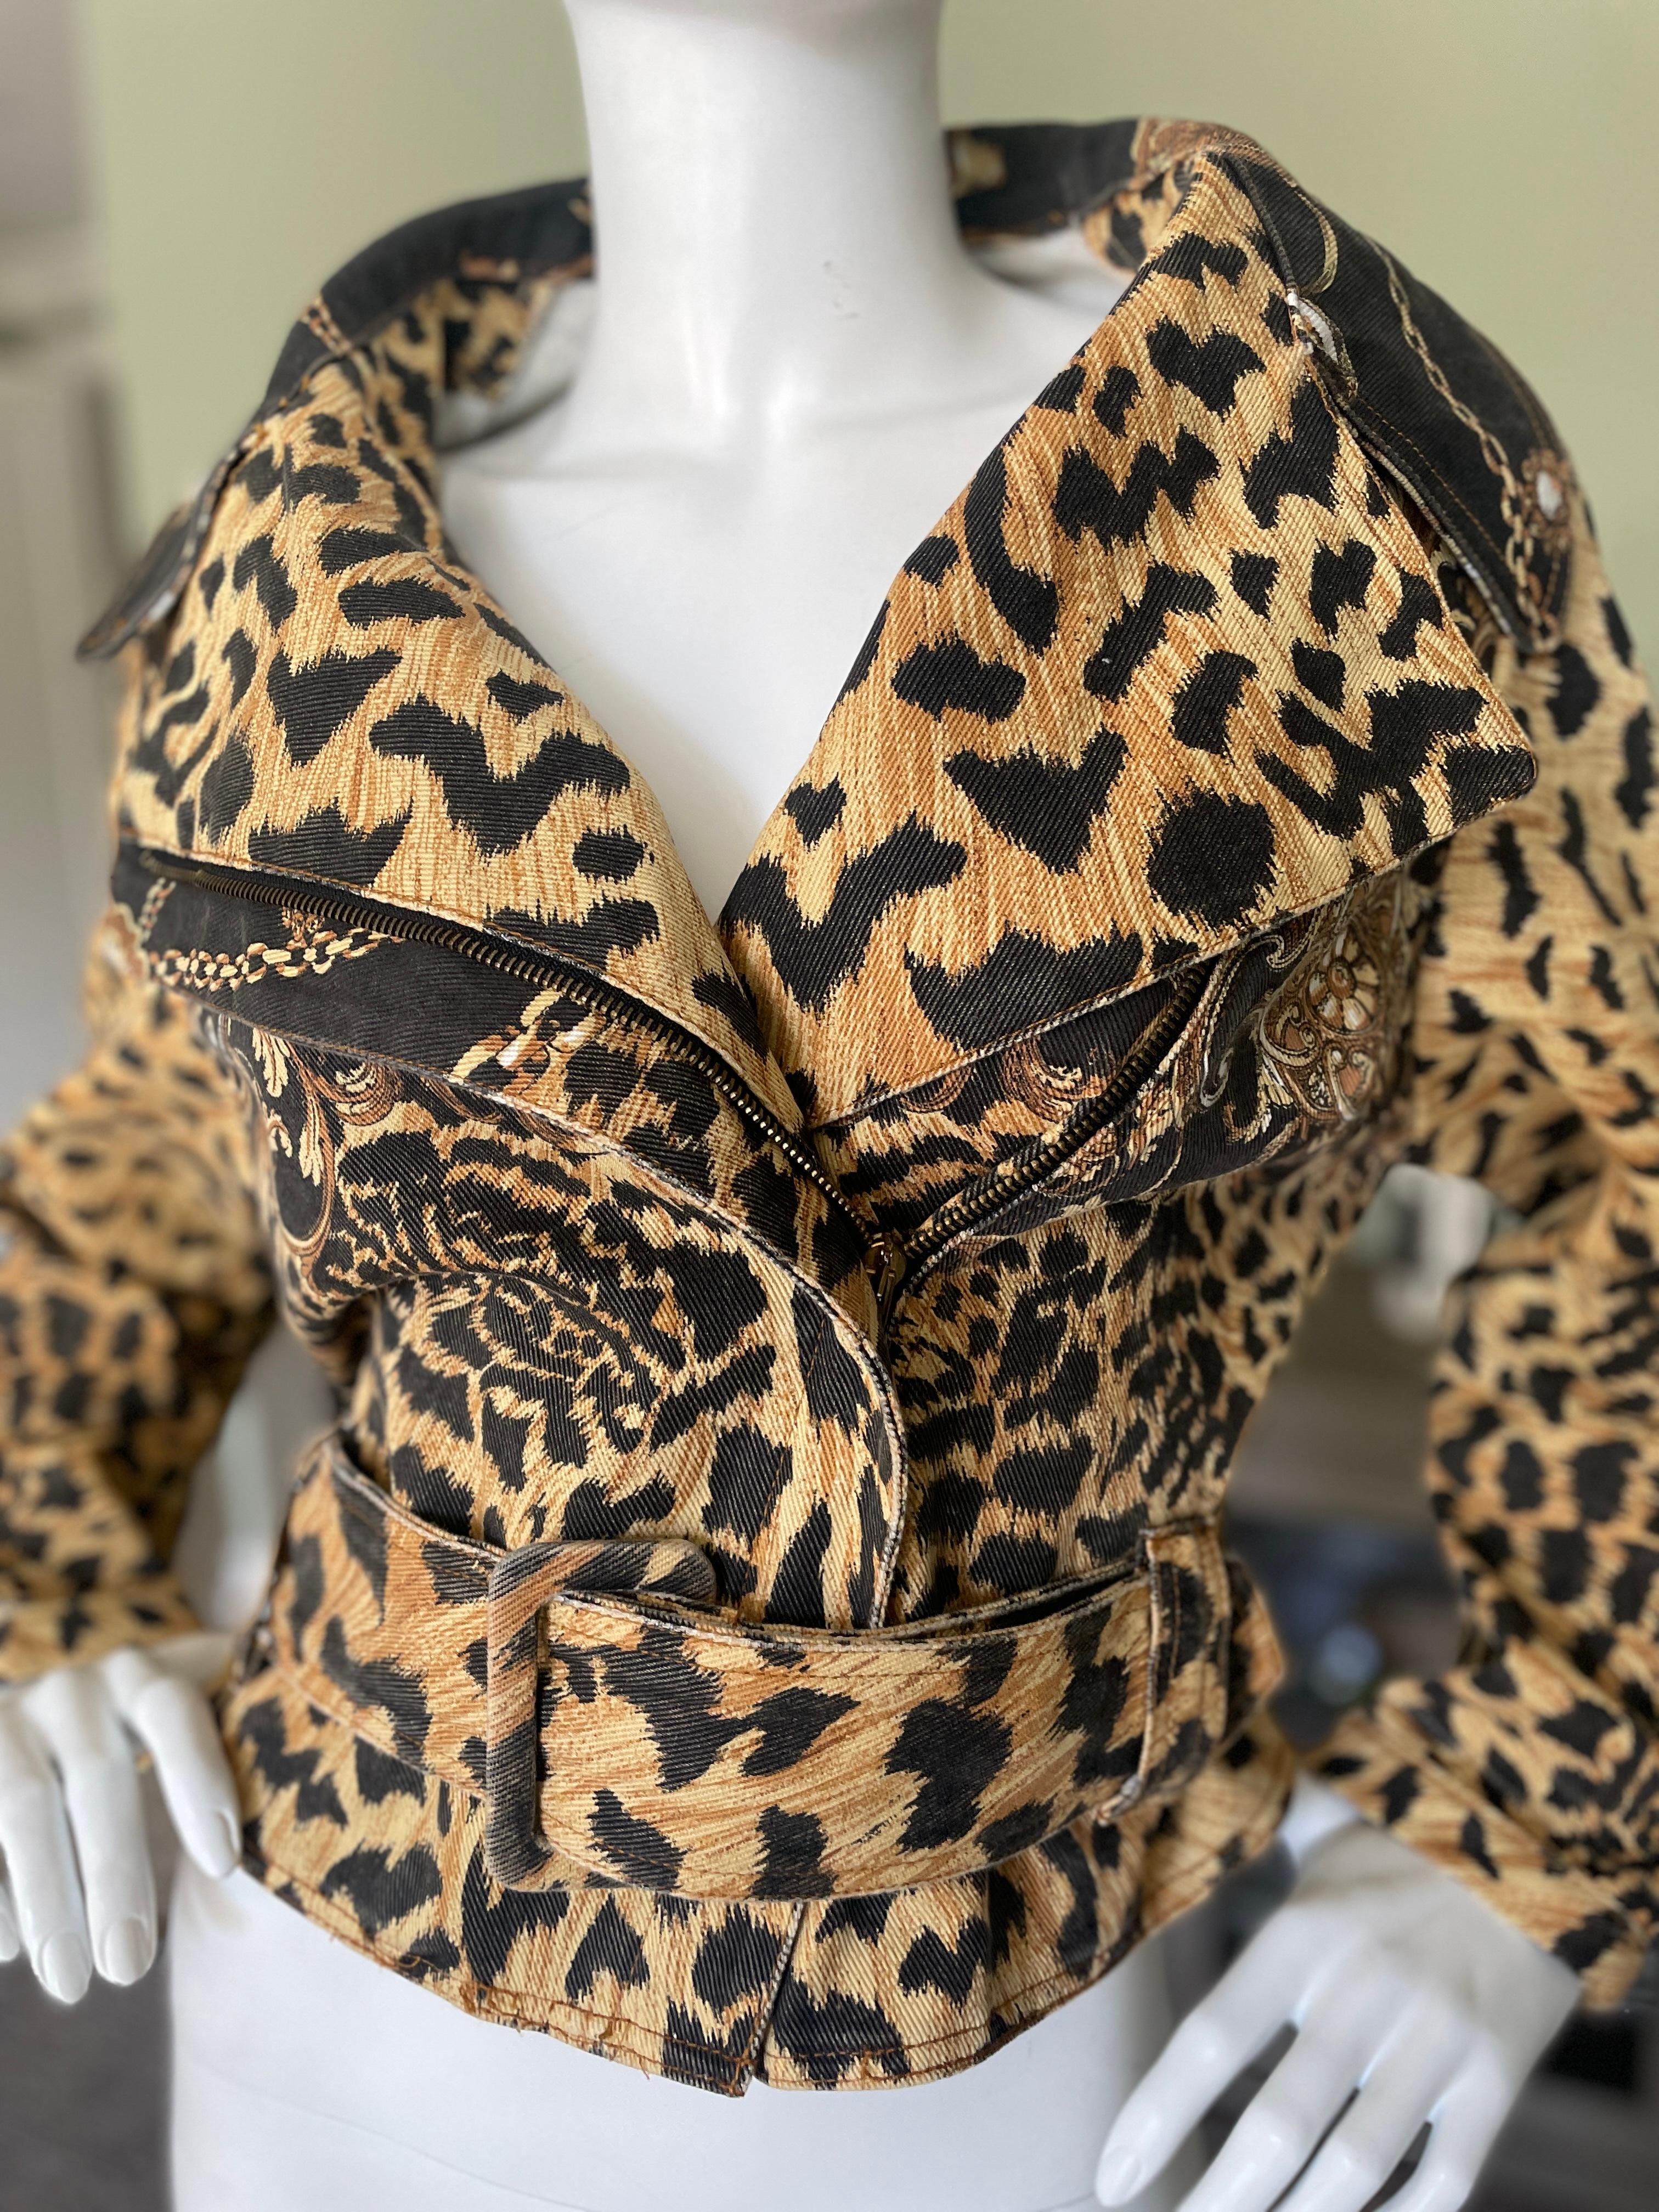 Roberto Cavalli Vintage Baroque Leopard Pattern Denim Motorcycle Jacket.
Size M
 Bust 40